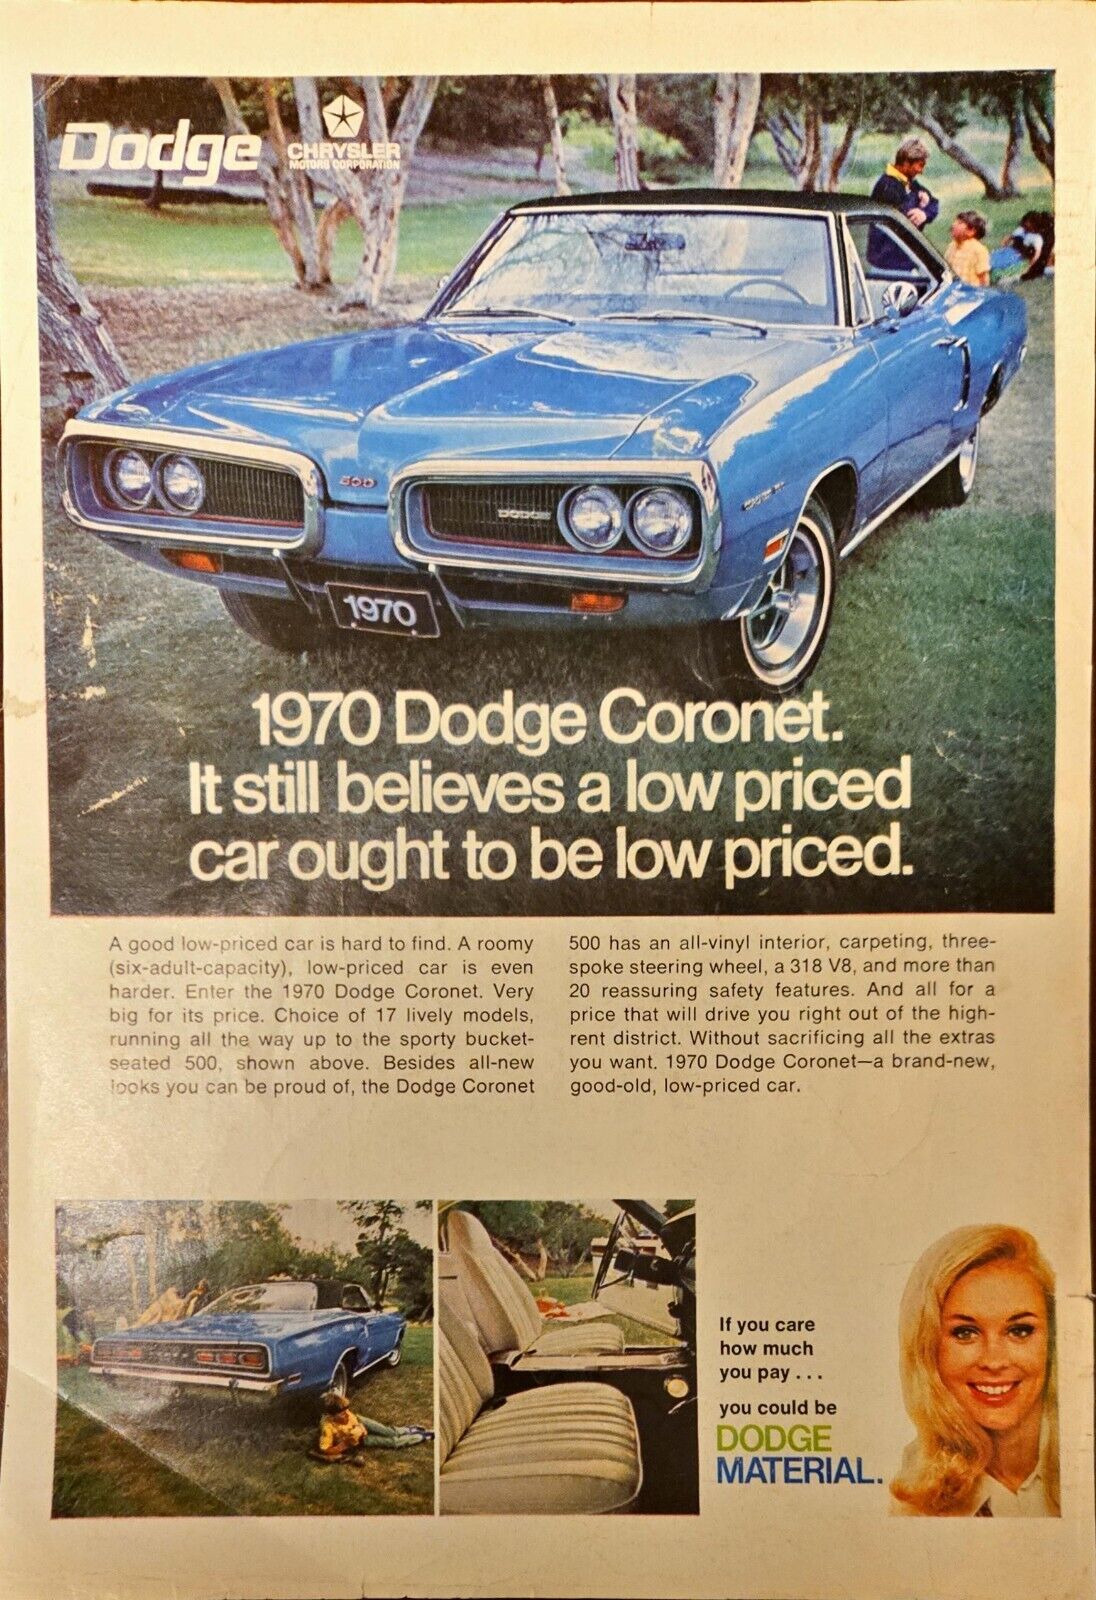 1970 Dodge Coronet 500 Chrysler motors Corporation Vintage Print Ad from 1969